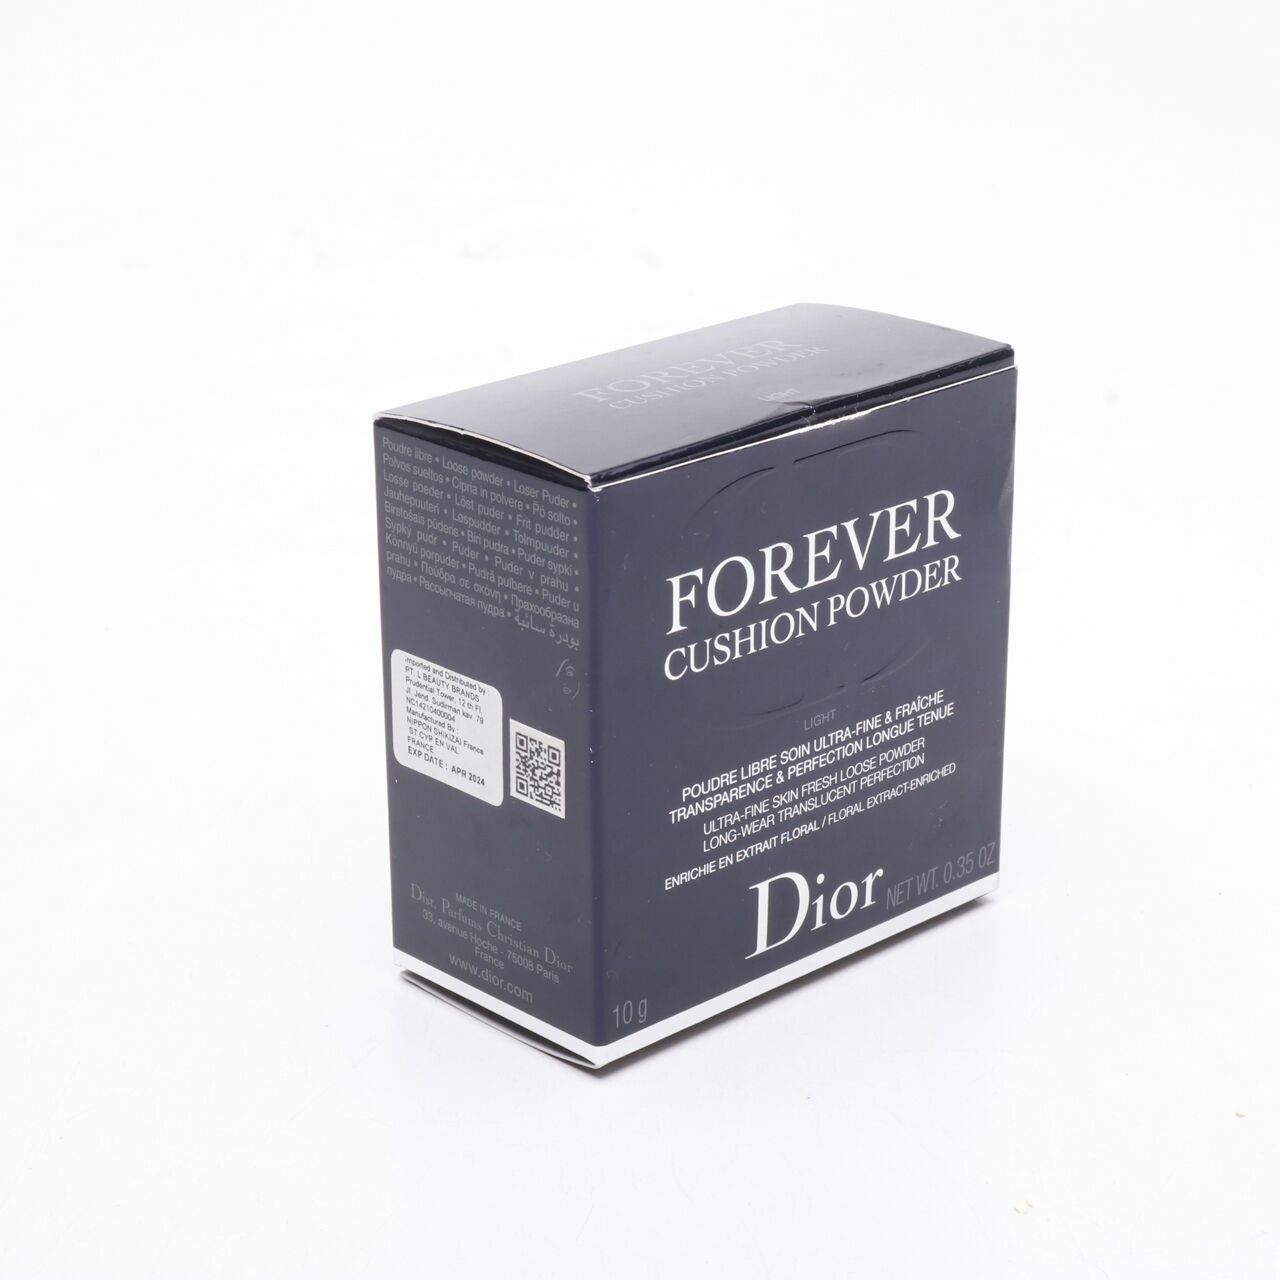 Christian Dior Forever Cushion Powder Faces